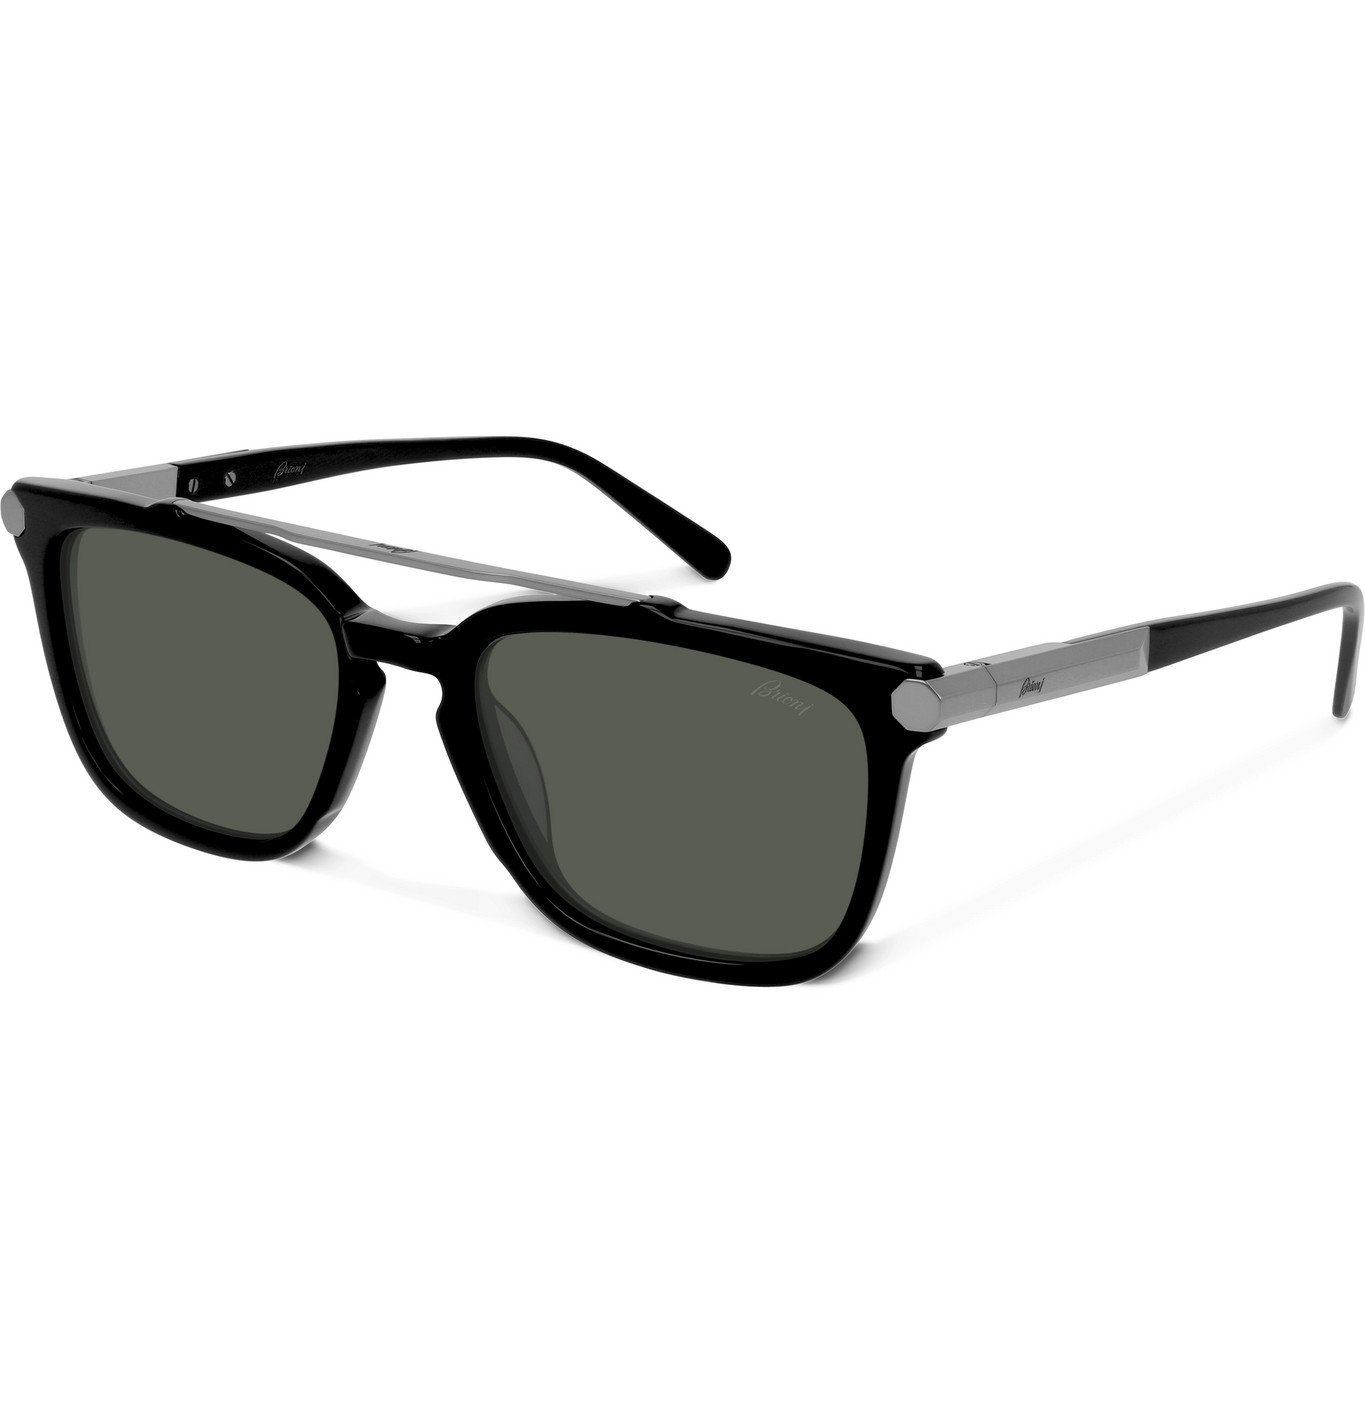 Brioni - Square-Frame Acetate and Gunmetal-Tone Sunglasses - Black Brioni